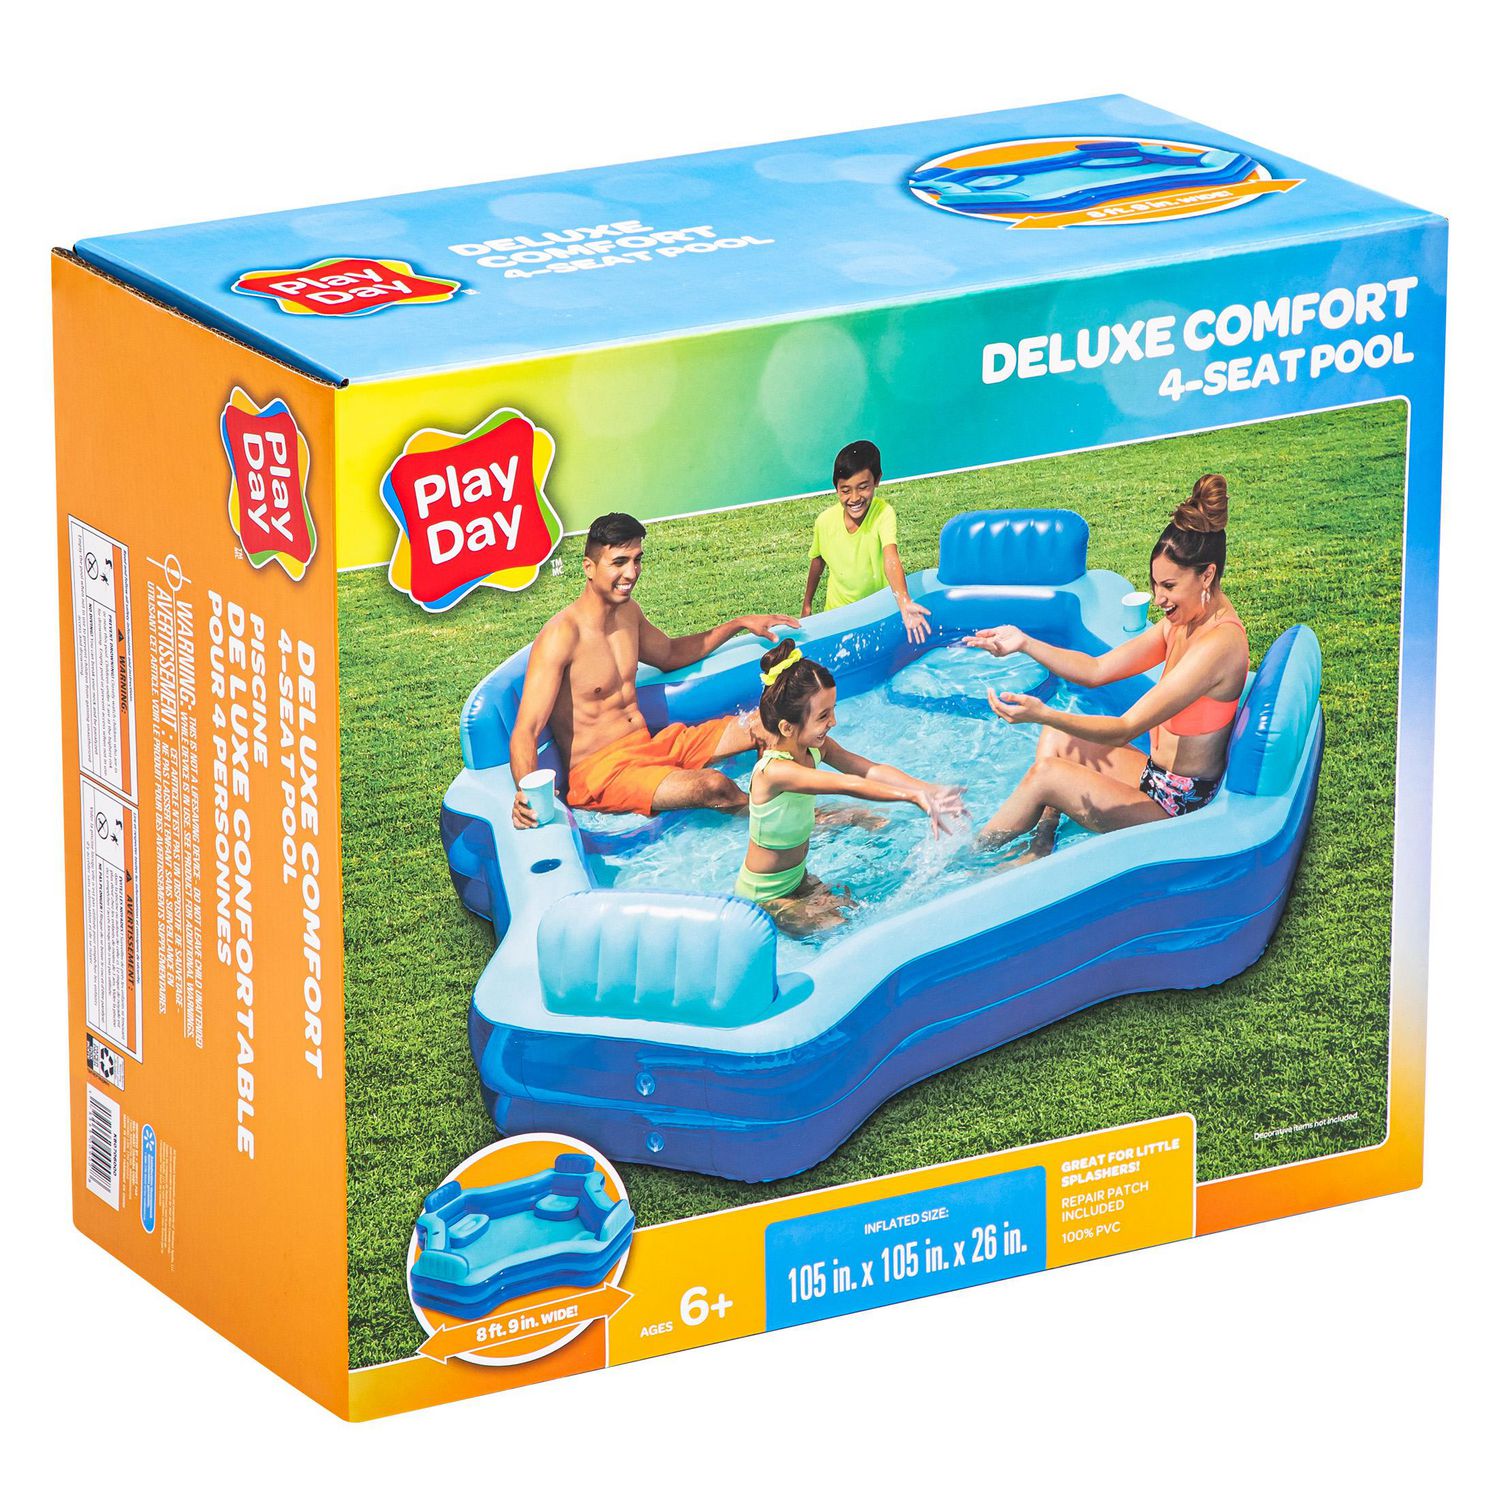 Play Day Deluxe Comfort Pool | Walmart Canada